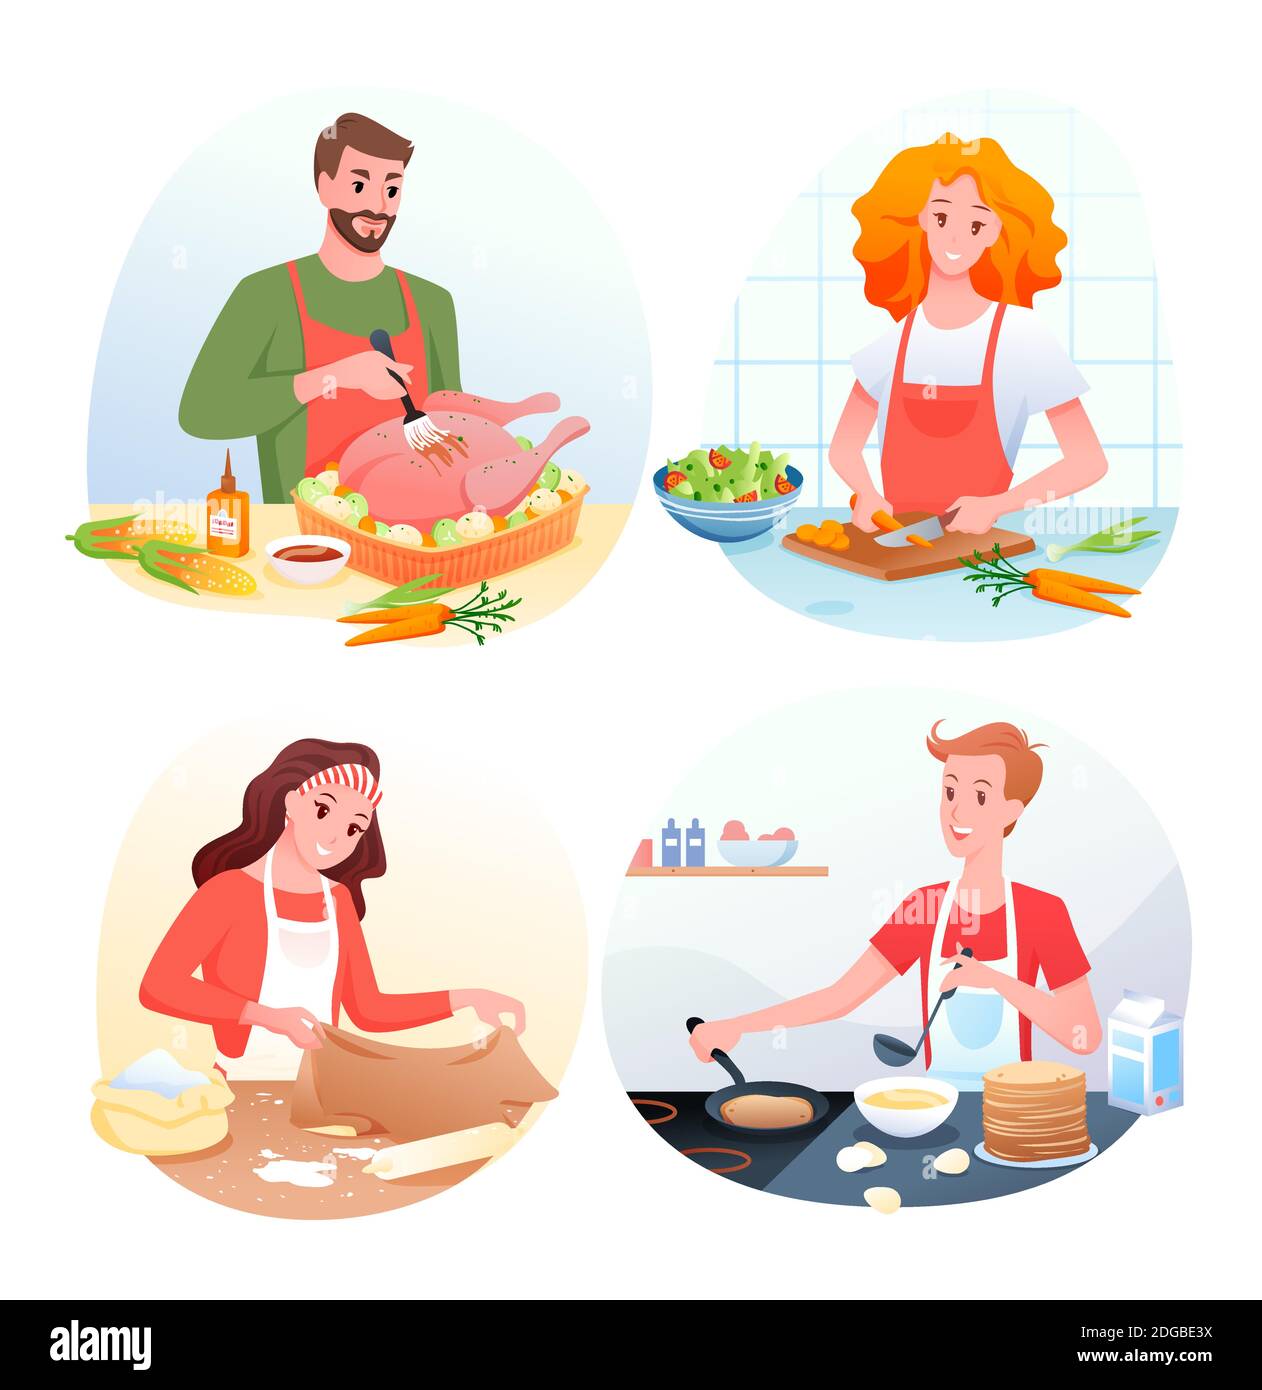 Cartoon Mann Frau Charaktere in Koch Schürzen Kochen grünen Gemüsesalat, gebackenen truthahn, Pfannkuchen, so dass Teig für Brot isoliert auf weiß. Stock Vektor